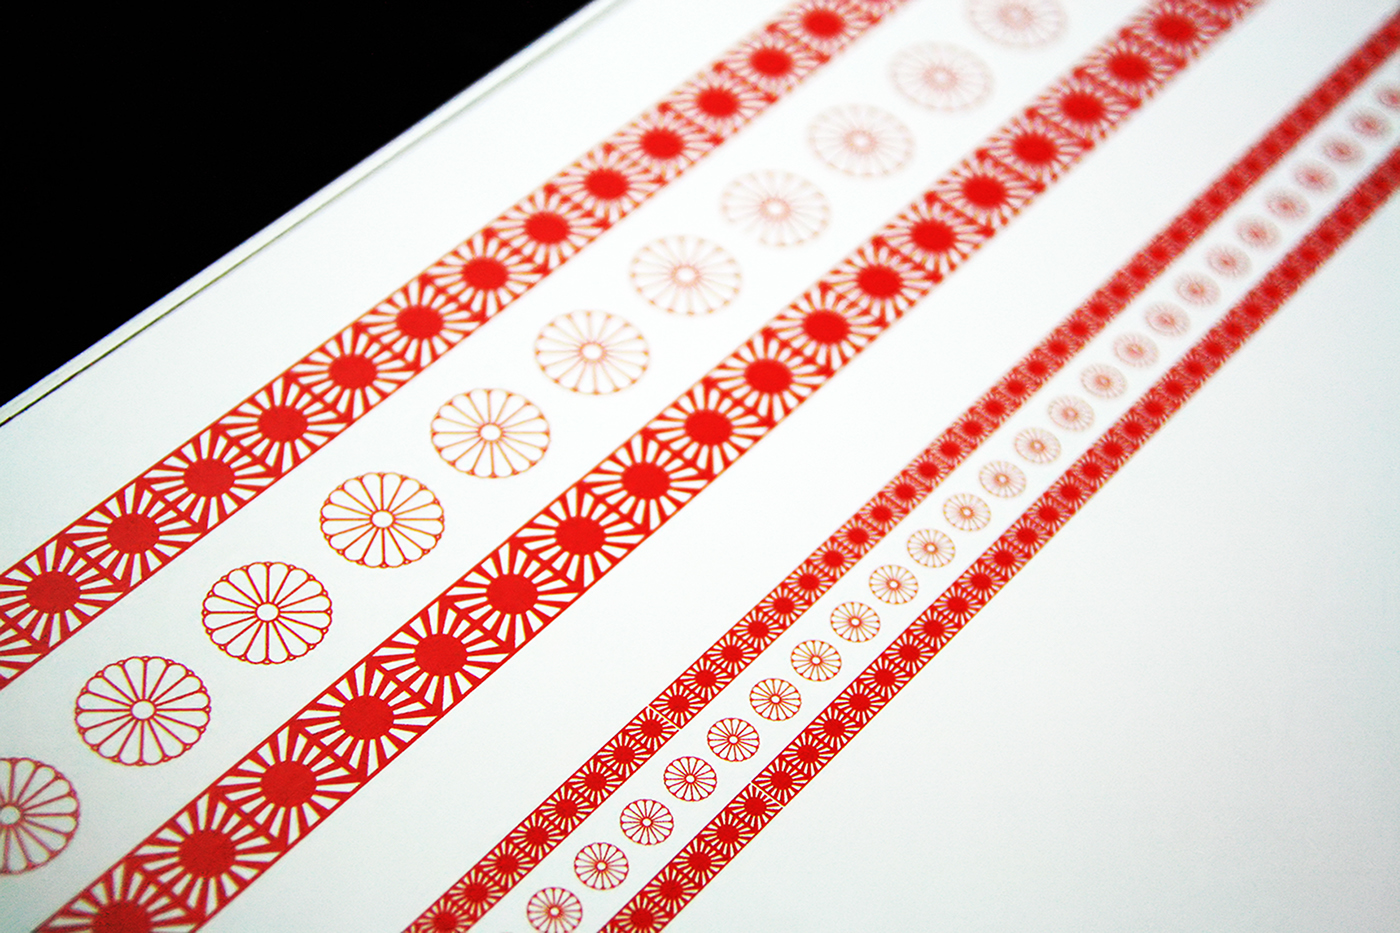 editorial graphic War japanese japan stamp design Serigraphy red black journal book binding traditional fanzine